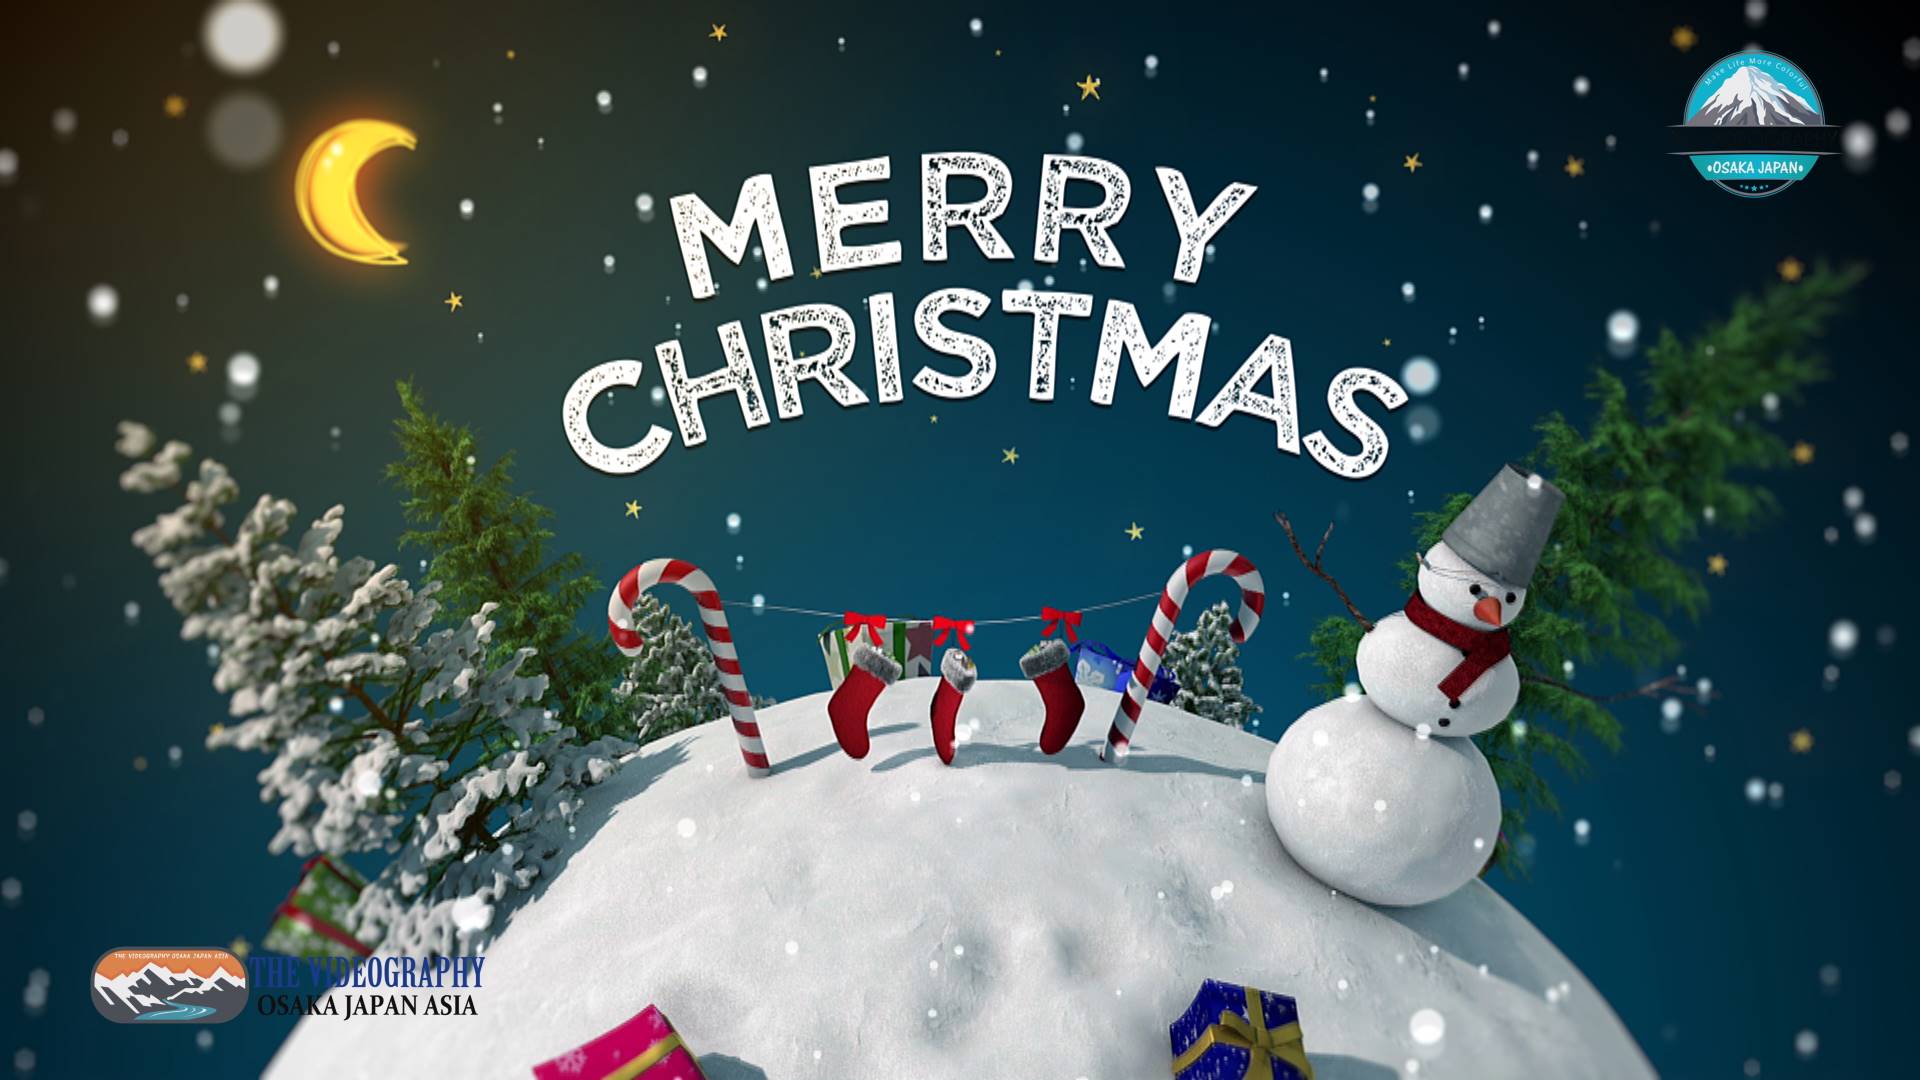 Merry Christmas! メリークリスマス! シーズン・プロモーションビデオ制作・Merry Christmas Promotion Video / メリークリスマス プロモーションビデオ 季節用動画 クリスマスシーズン用メリークリスマスムービー・デジタルサイネージやWeb動画 YouTube用動画として最適なプロモーションビデオです。動画広告の映像制作はビデオグラフィ。